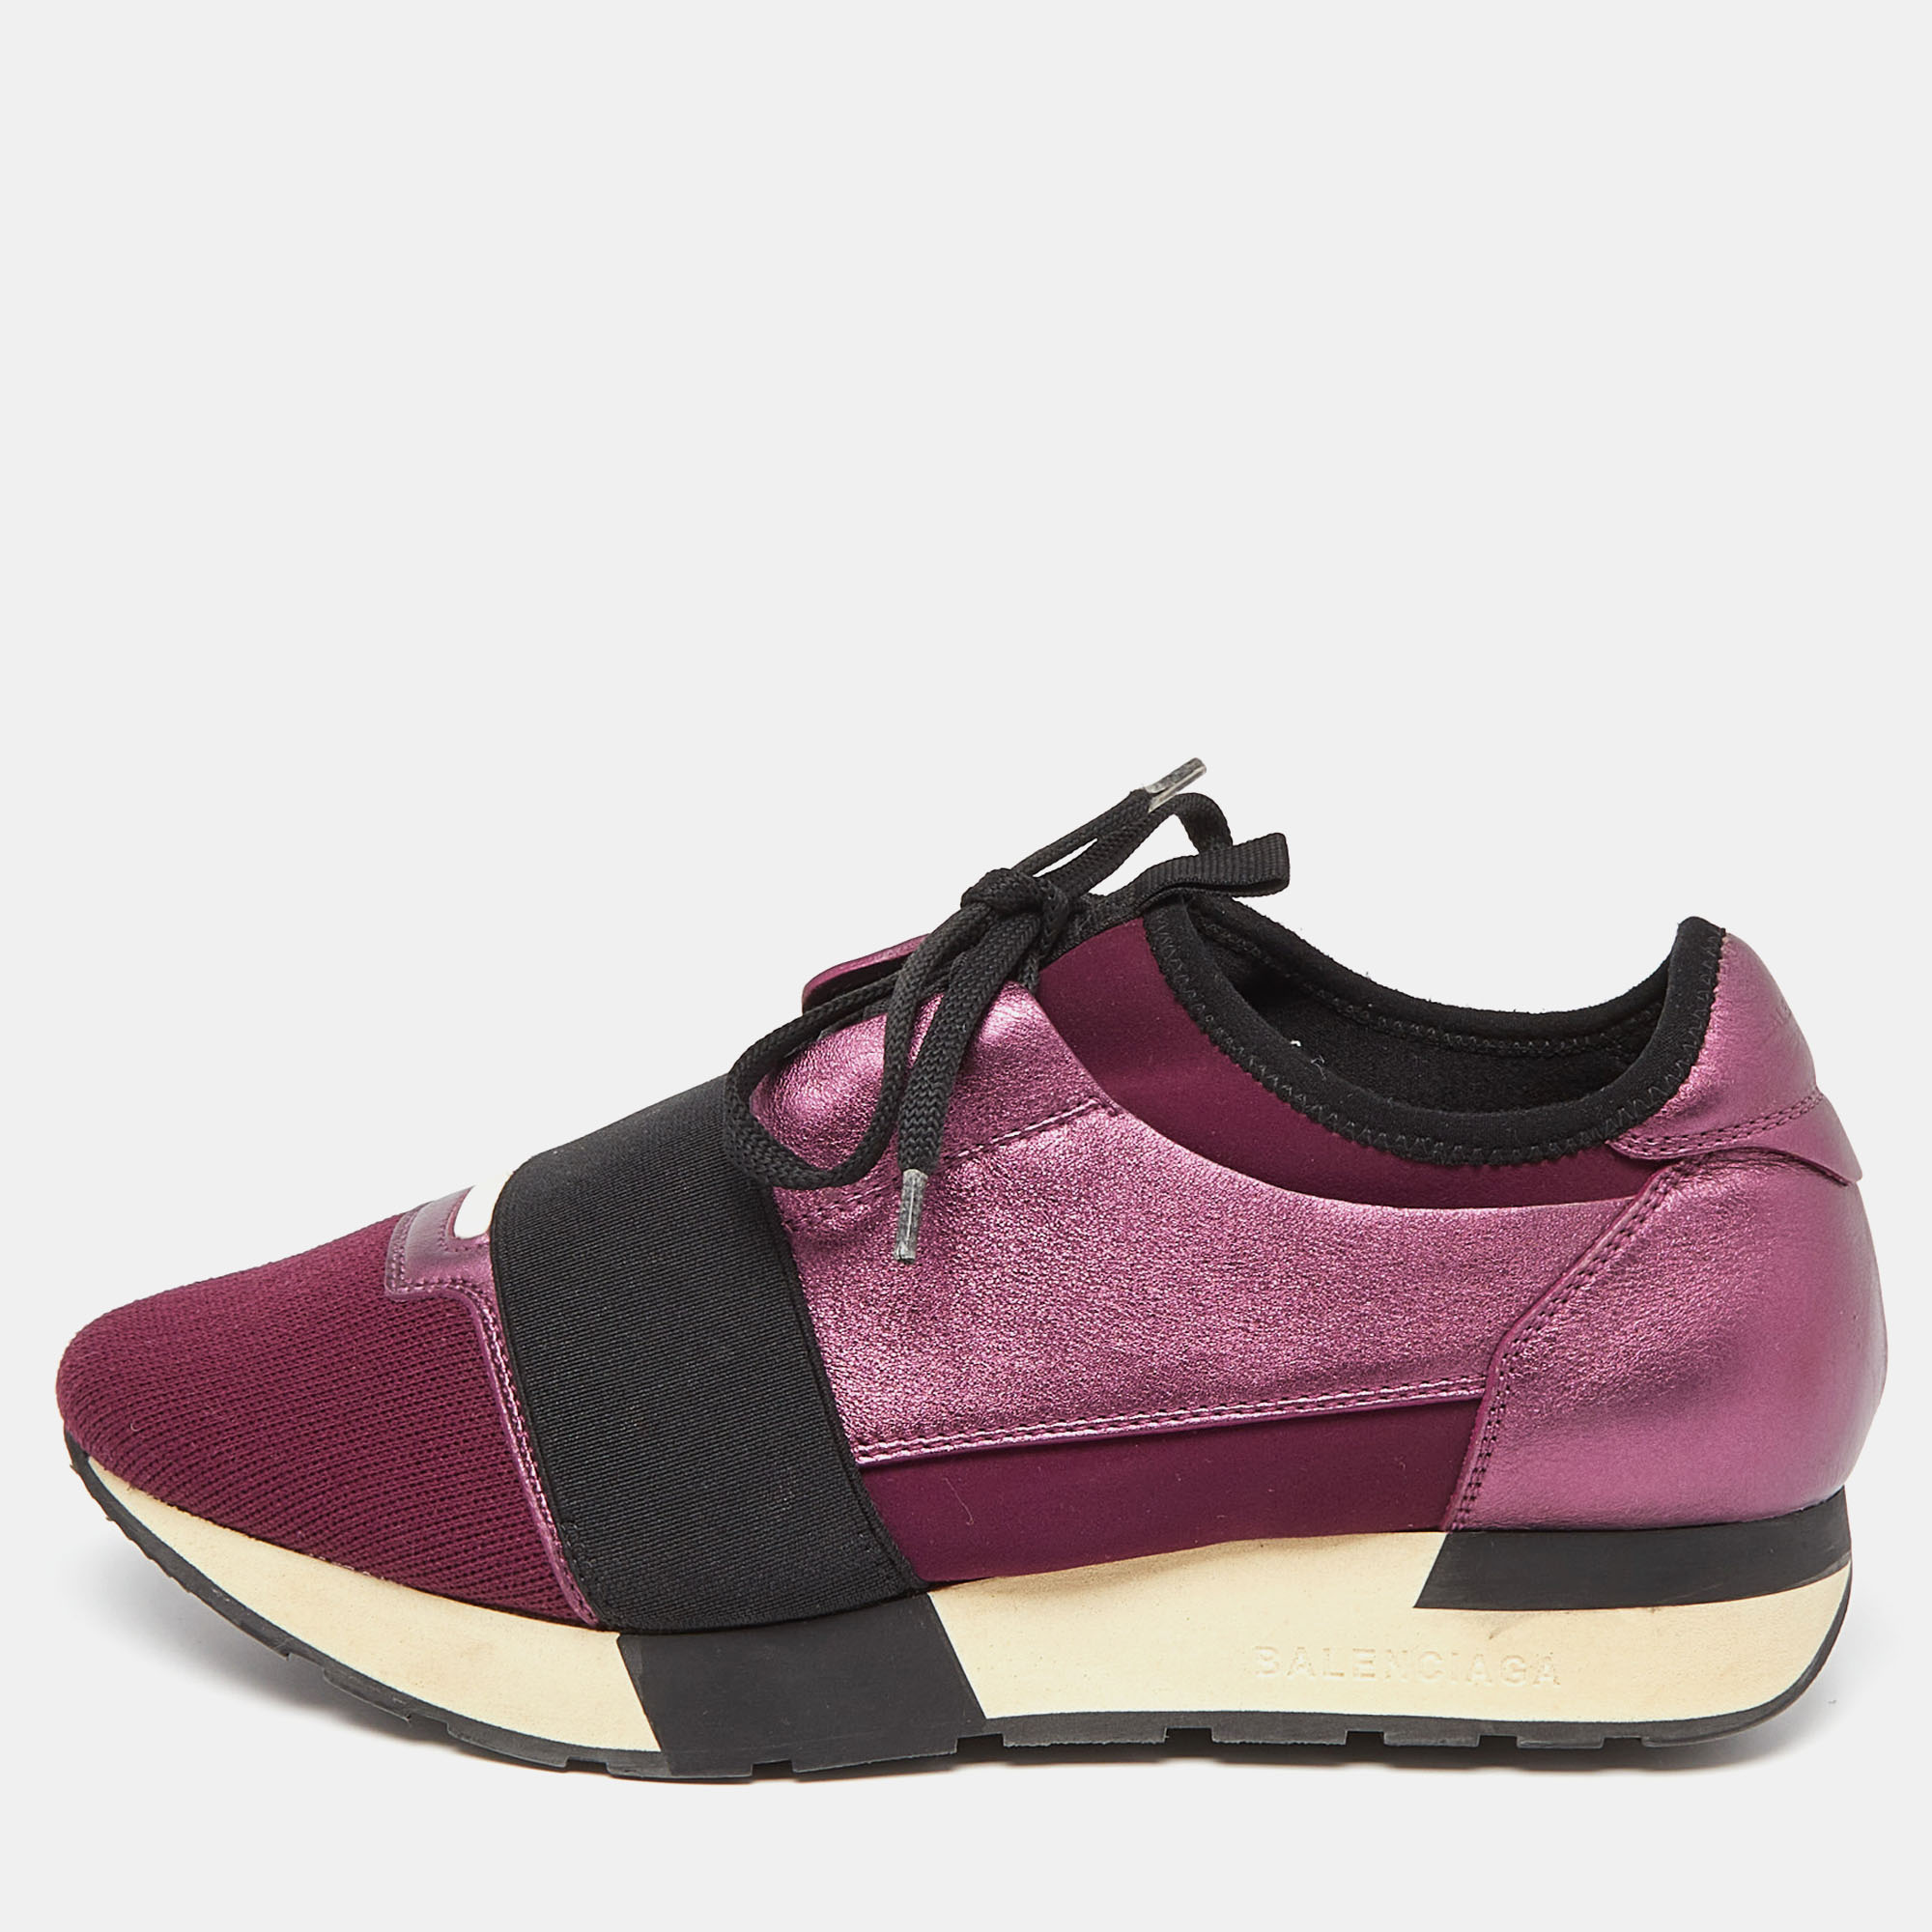 Balenciaga purple leather and neoprene race runner sneakers size 38